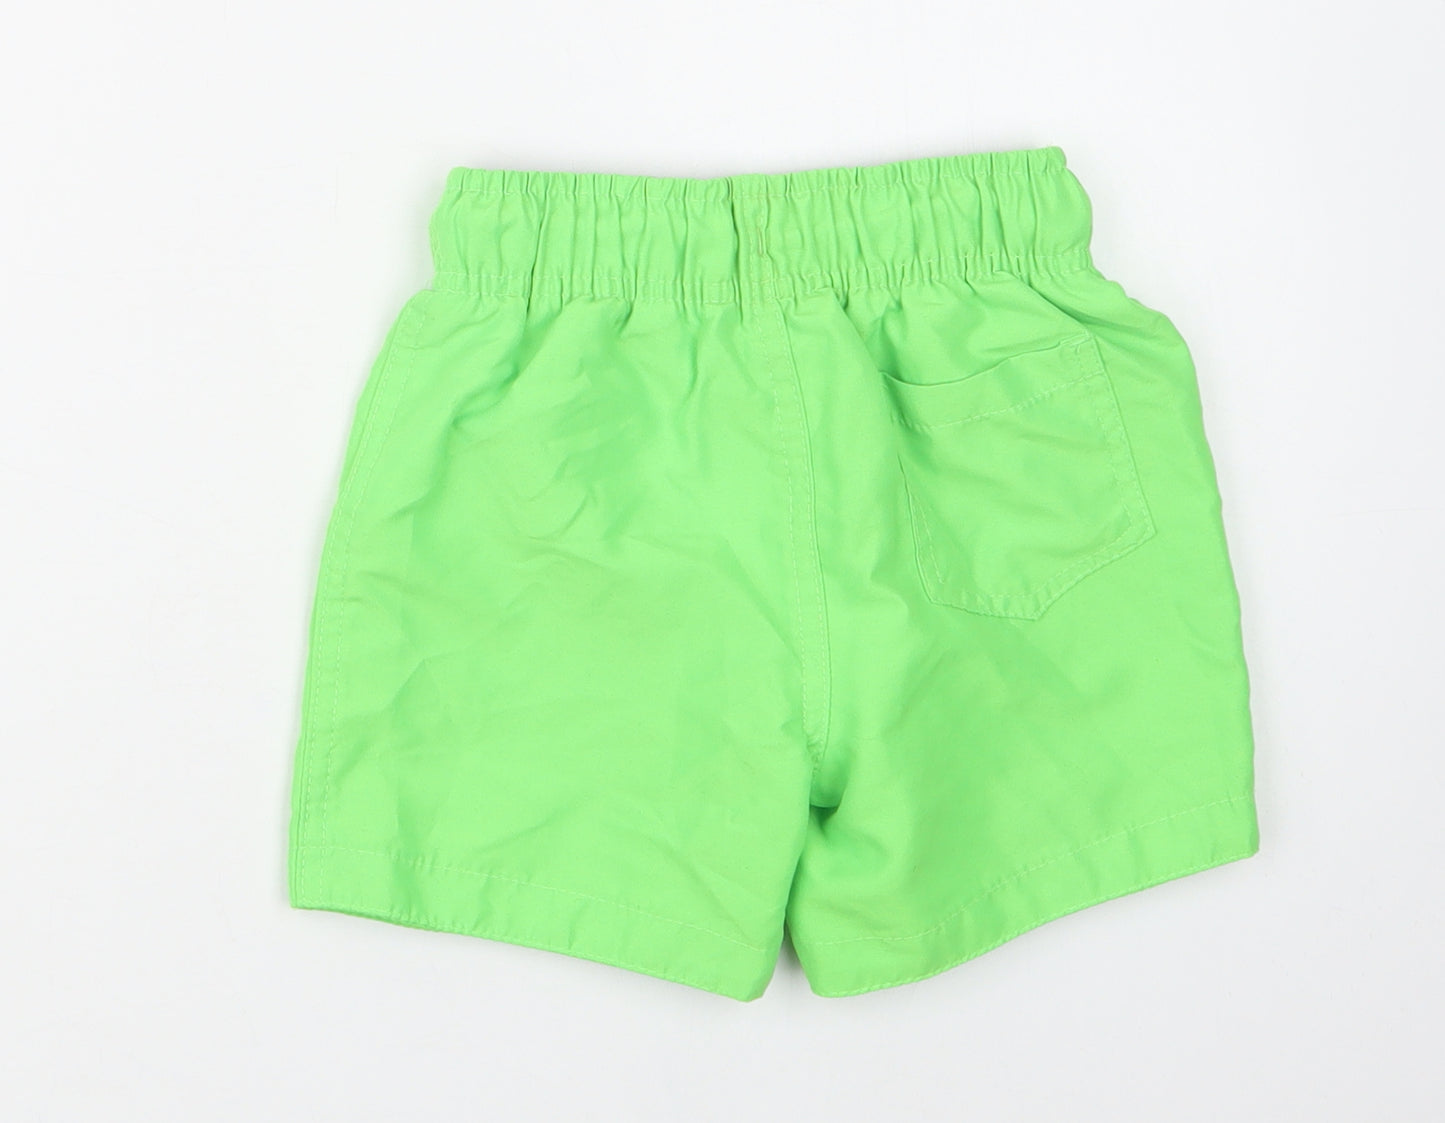 Primark Boys Green  Polyester Biker Shorts Size 4-5 Years  Regular Drawstring